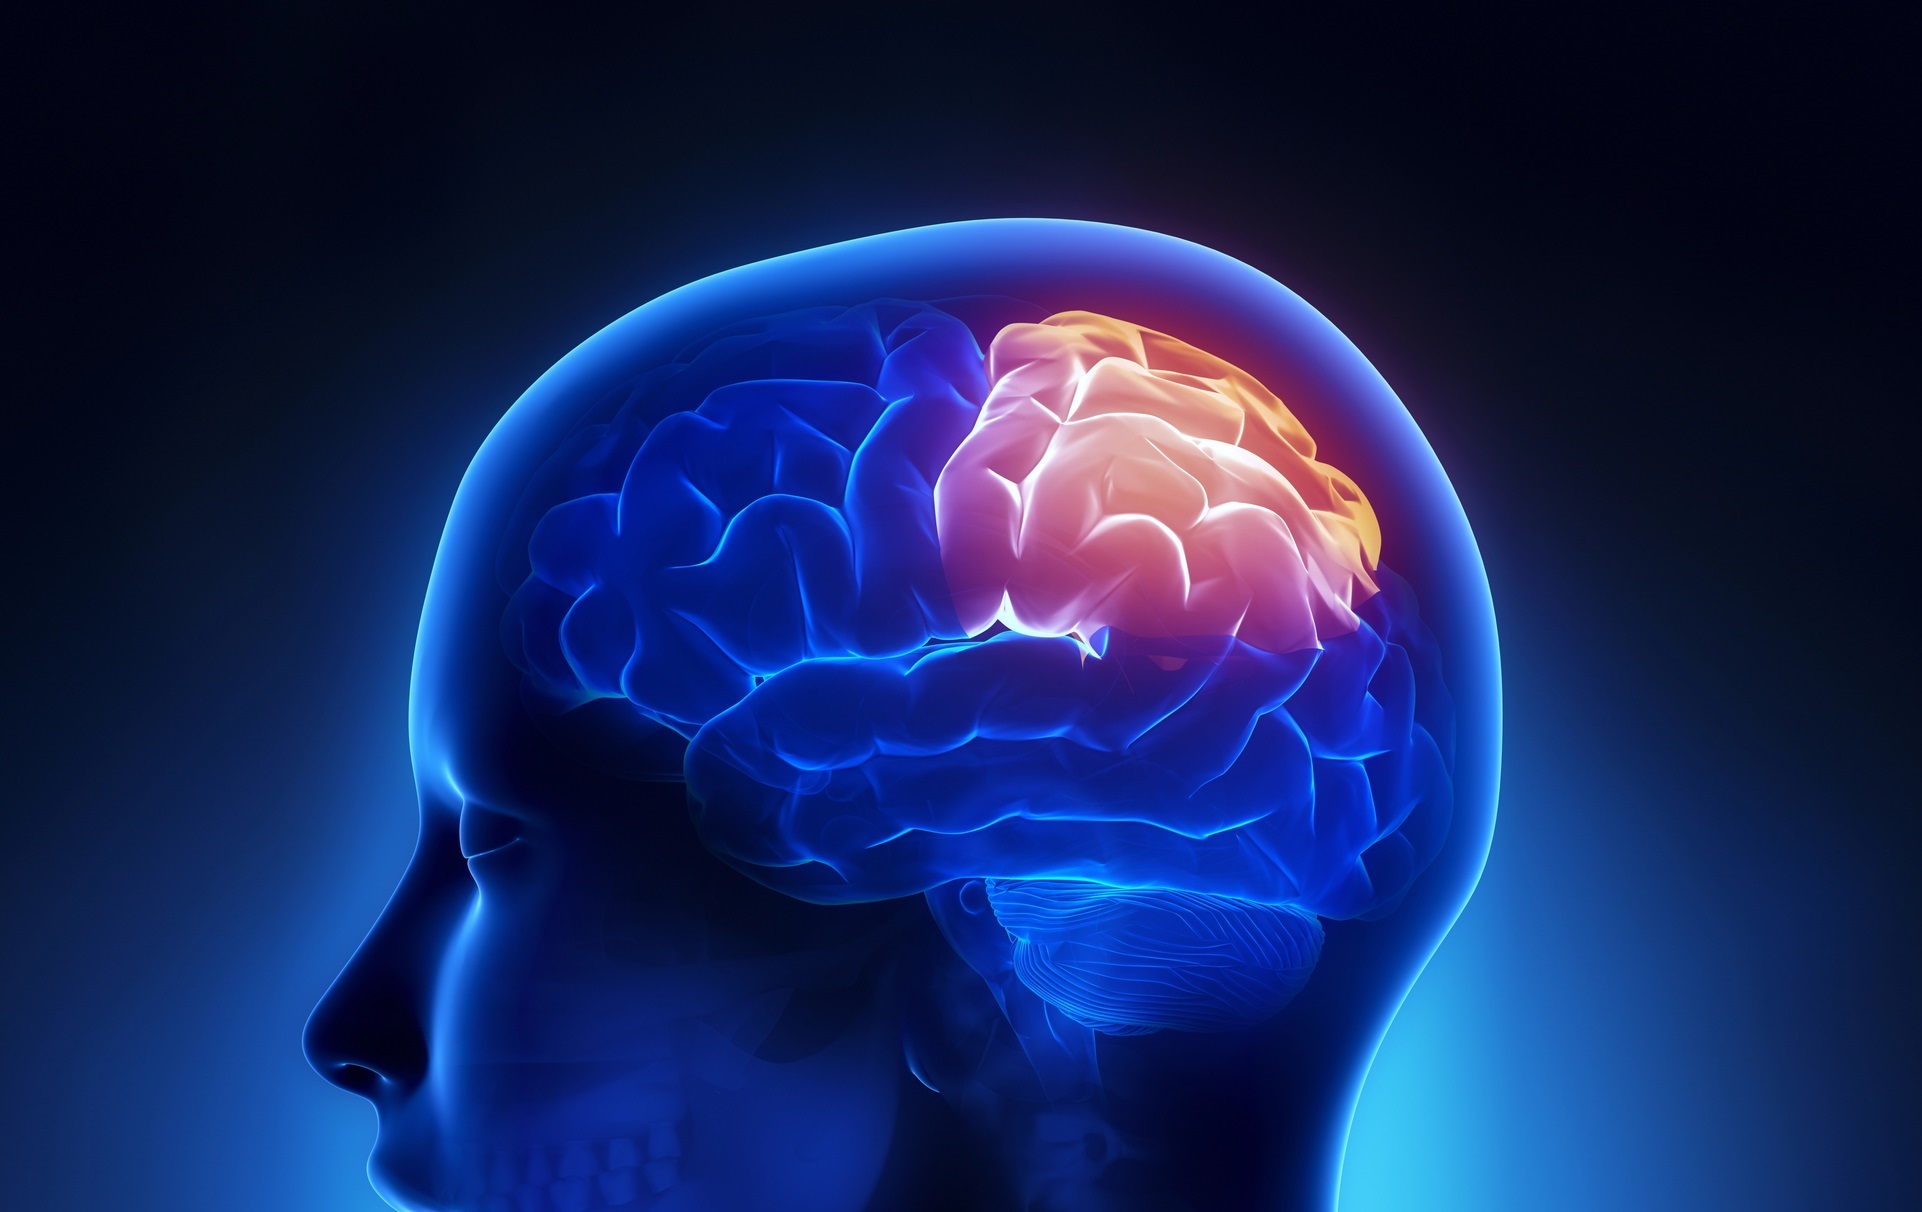 Dr John Kershner | Understanding the Causes and Brain Mechanisms Behind Dyslexia